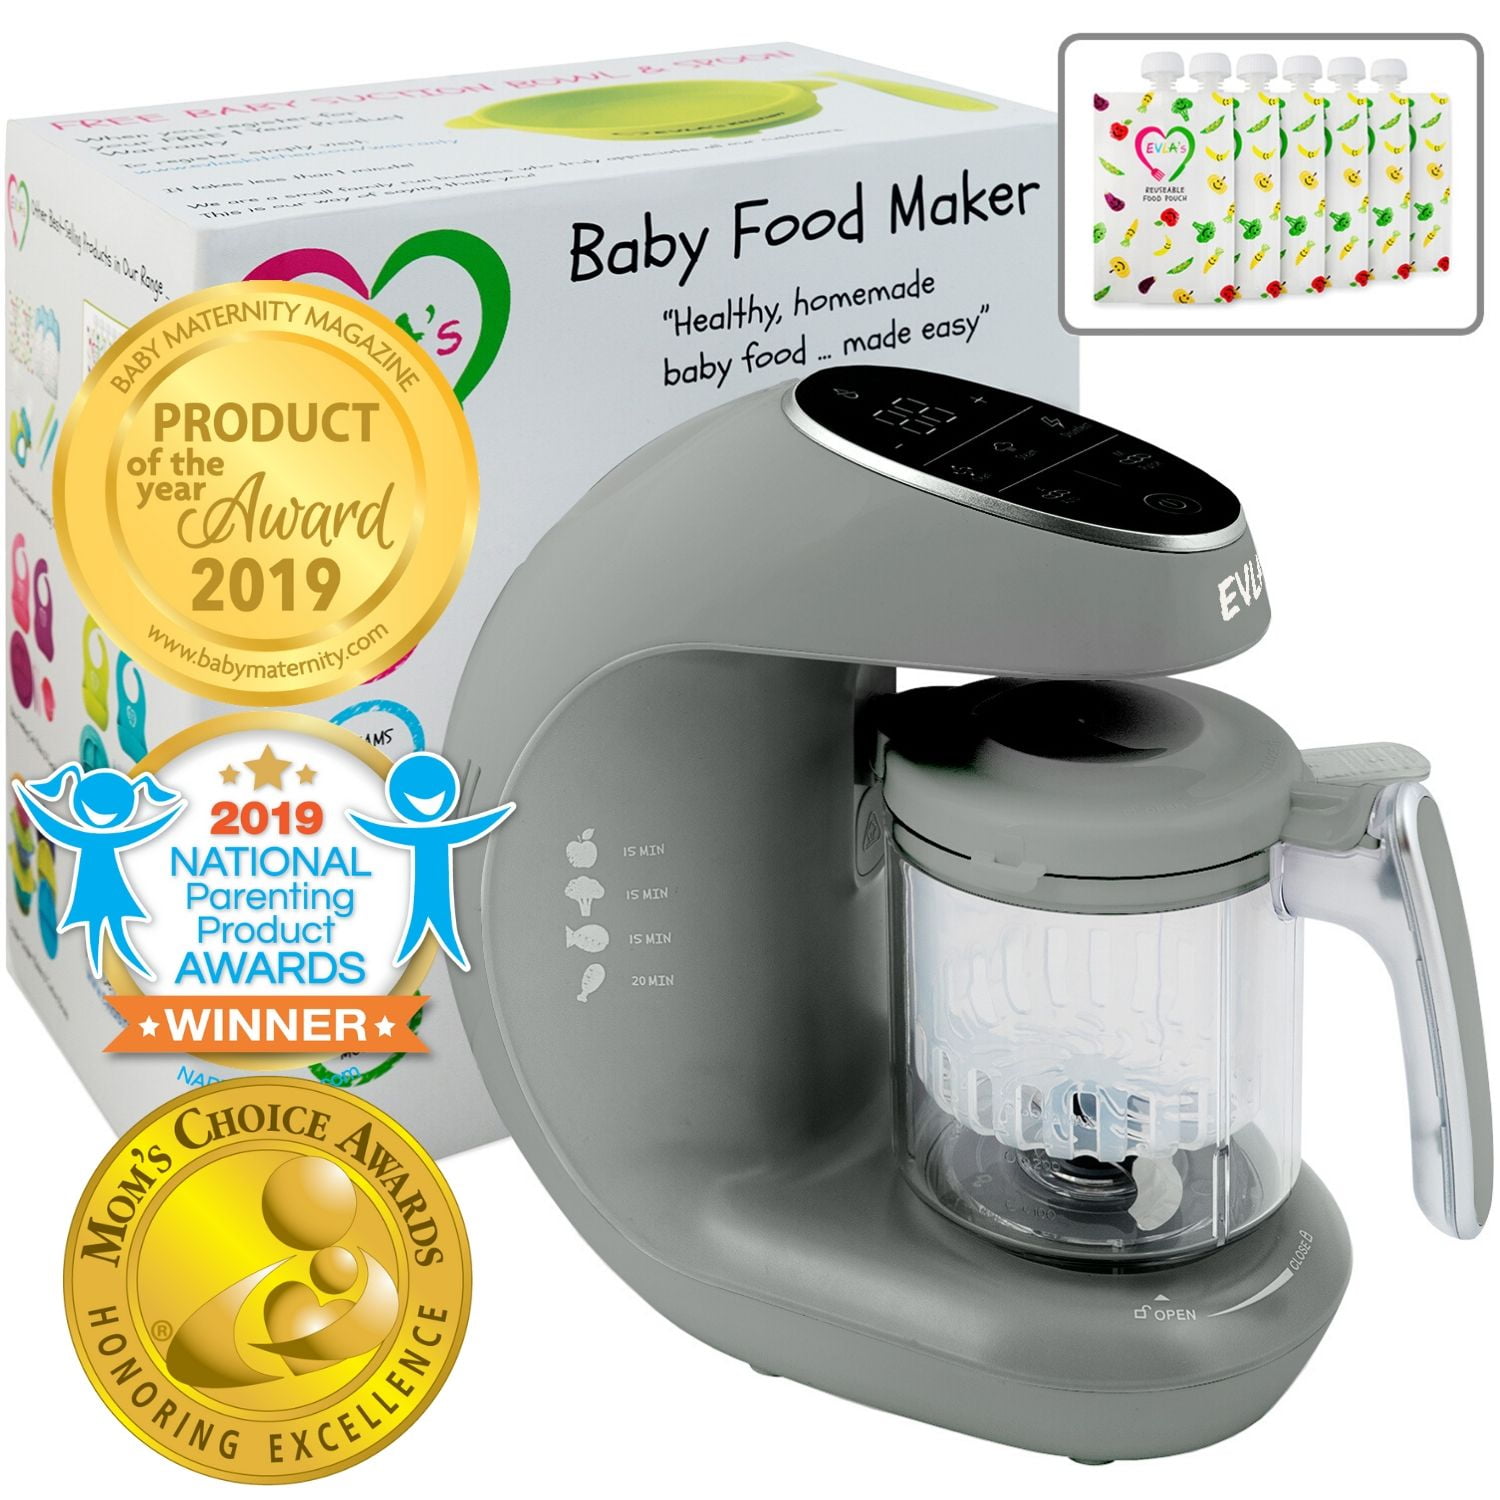 Amplim 11-in-1 Baby Food Maker Processor, Steam Blend Puree Grind Chop  Juice Defrost Reheat; Sanitize Warm Bottle